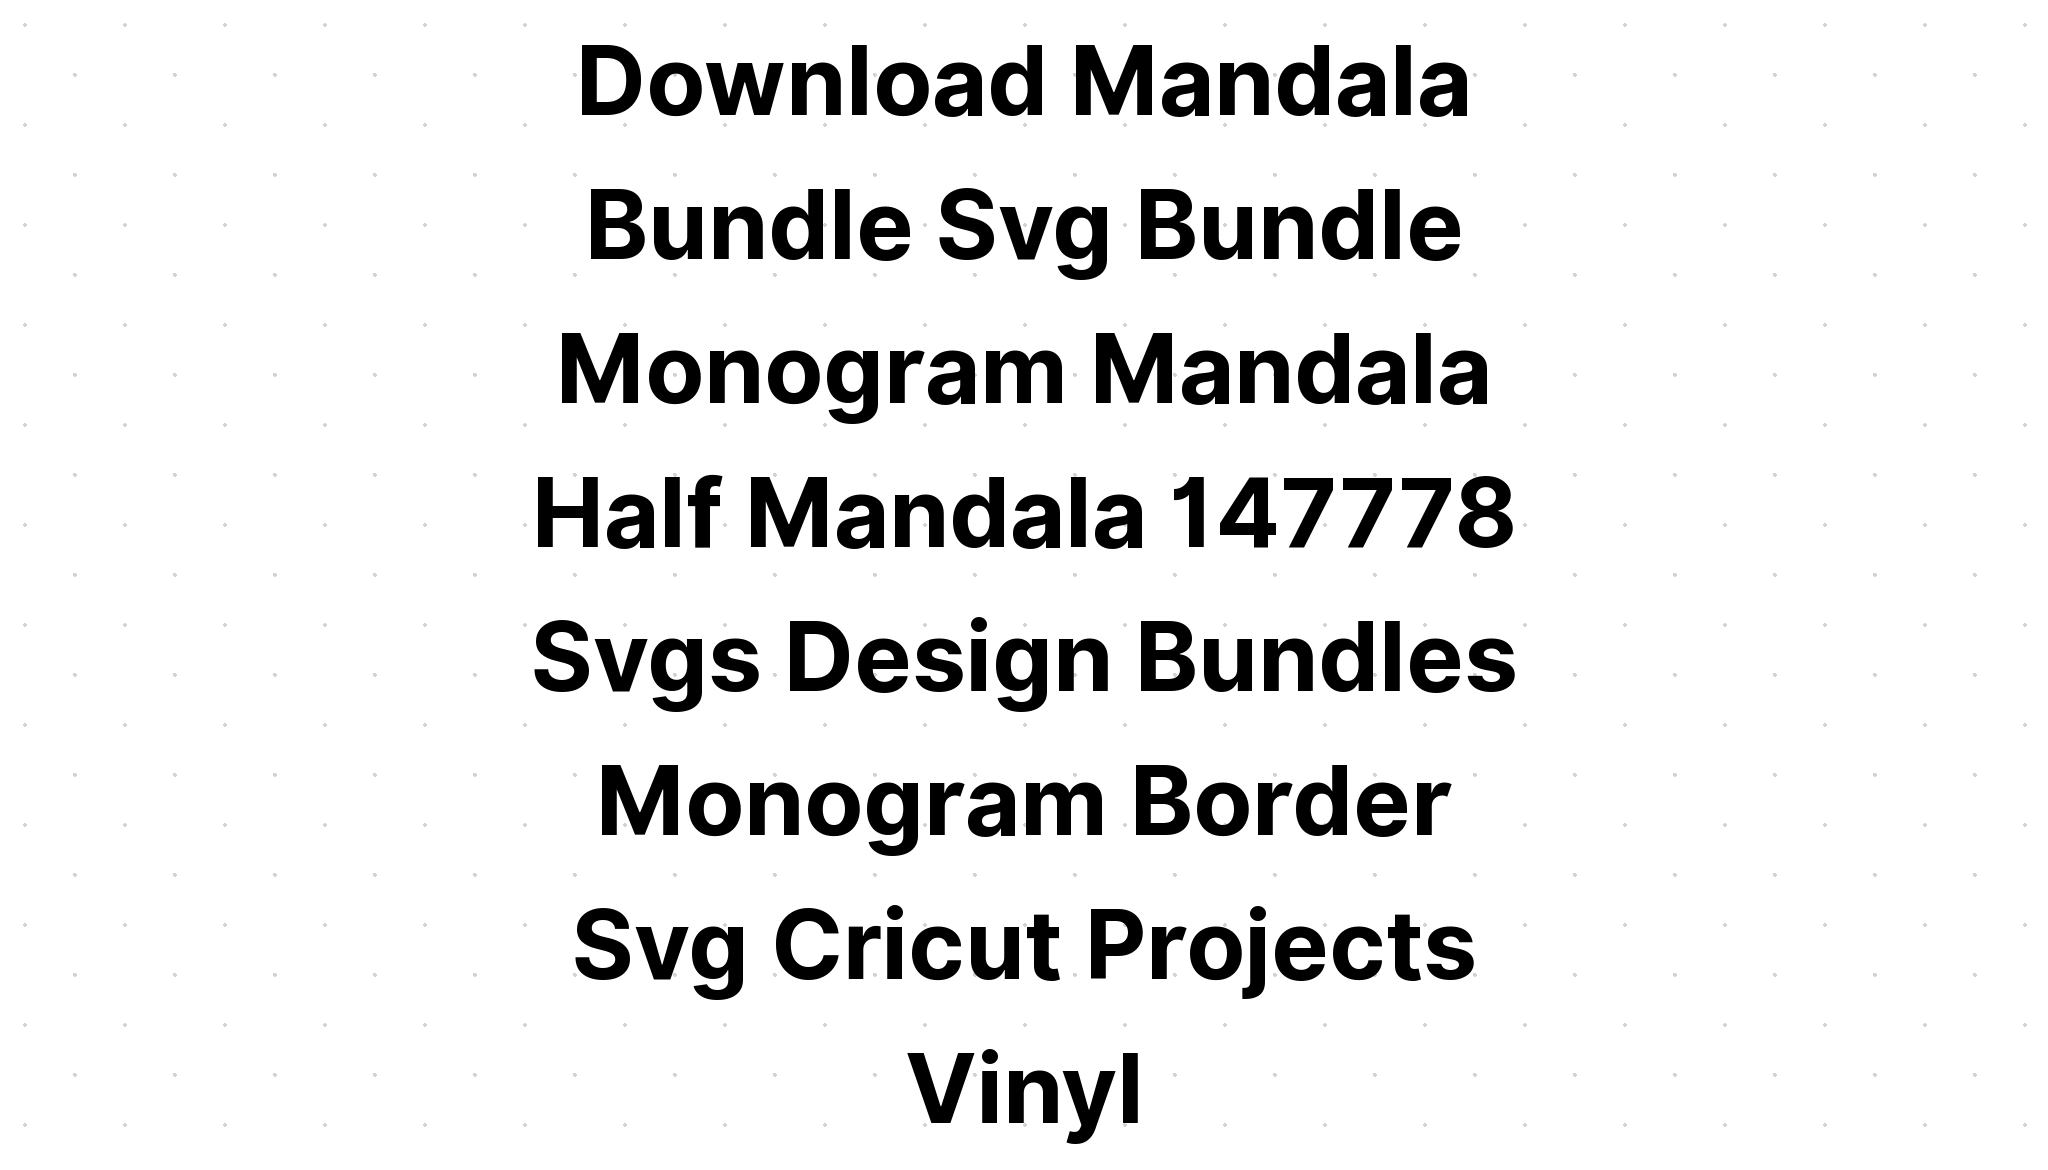 Download Mandala Border Svg For Crafters - Free SVG Cut File